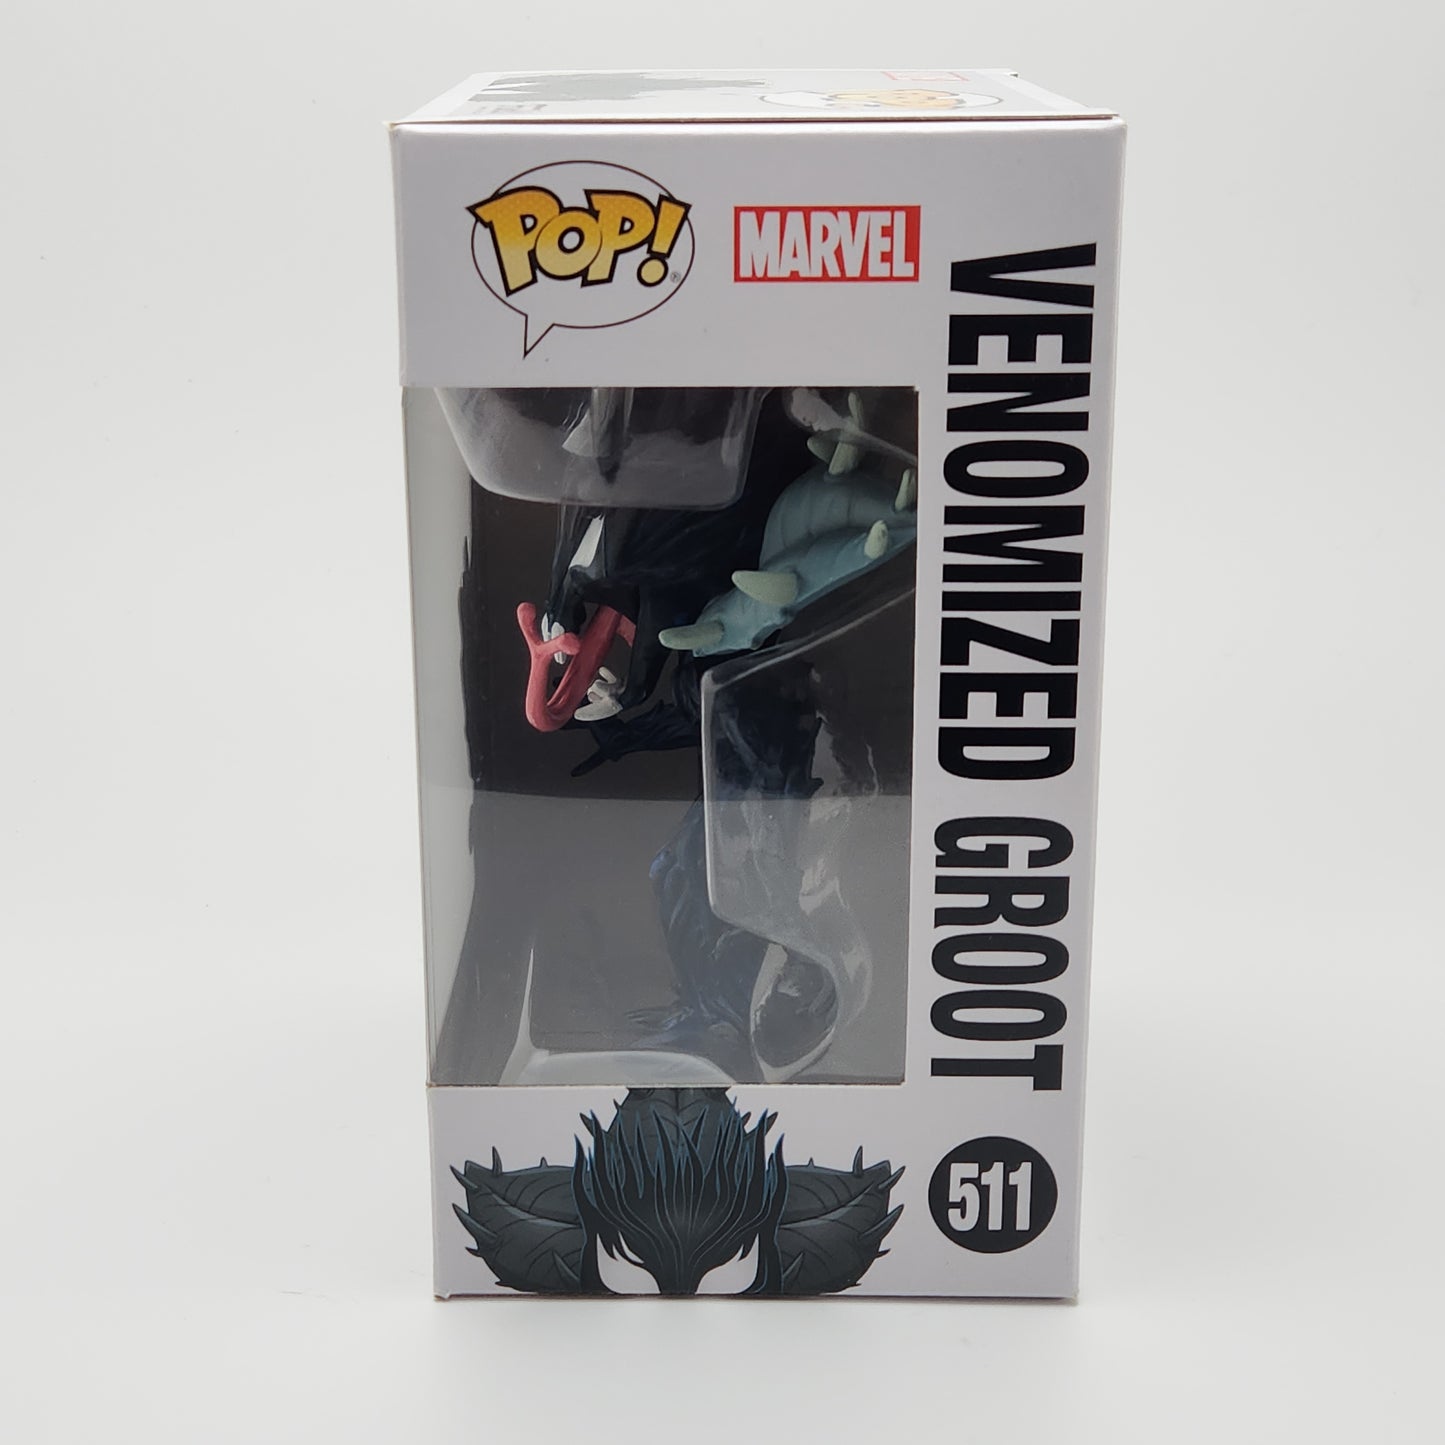 Funko Pop! Marvel- Venom: Venomized Groot